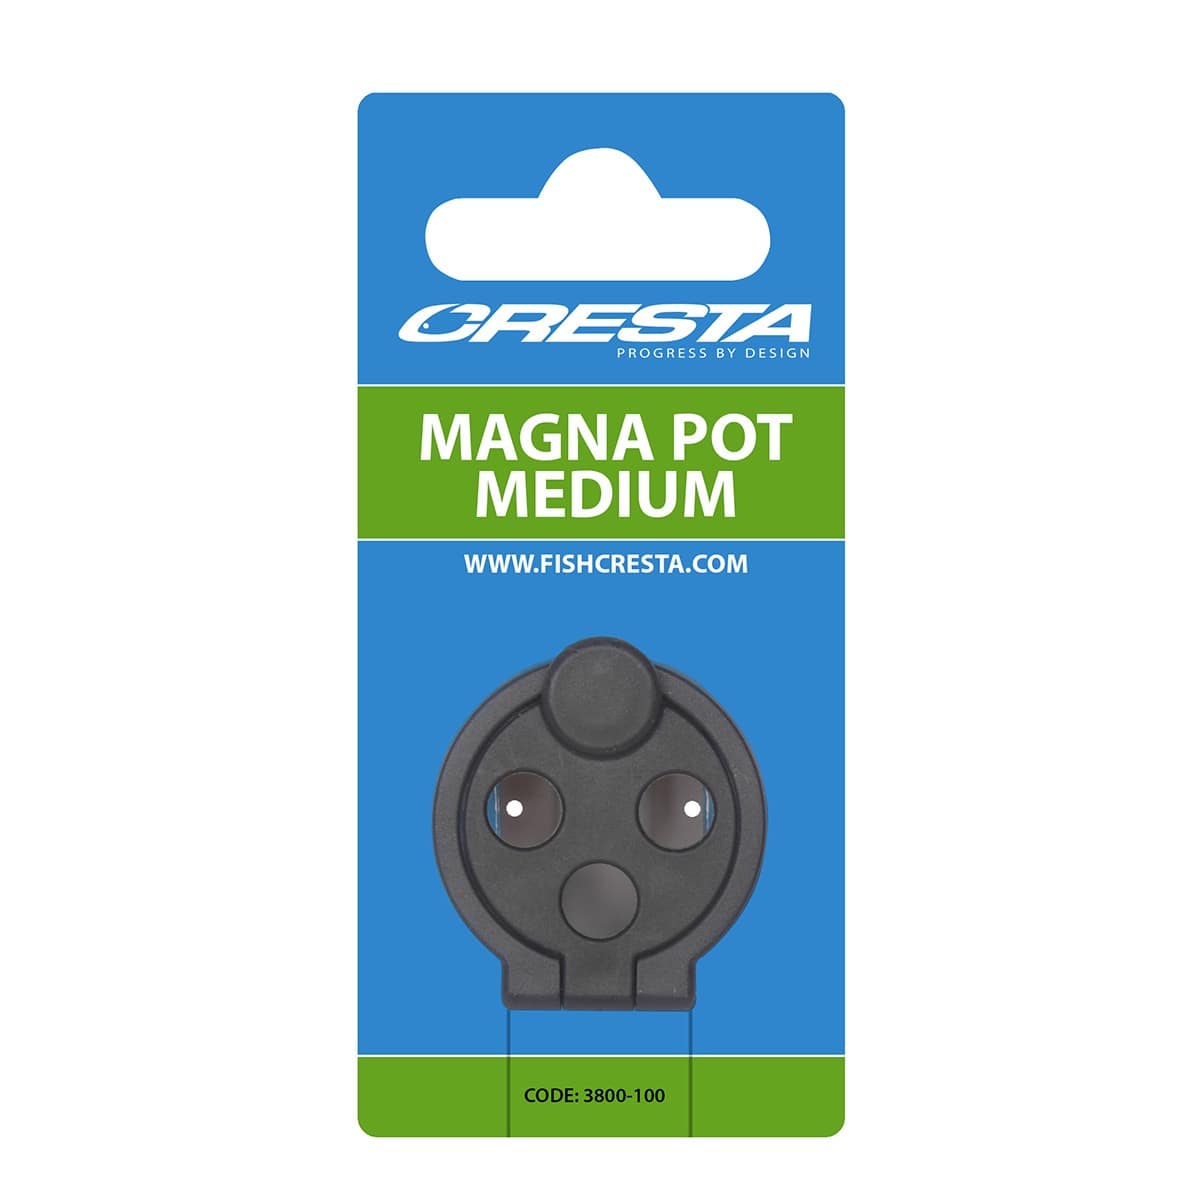 Cresta magna pot medium